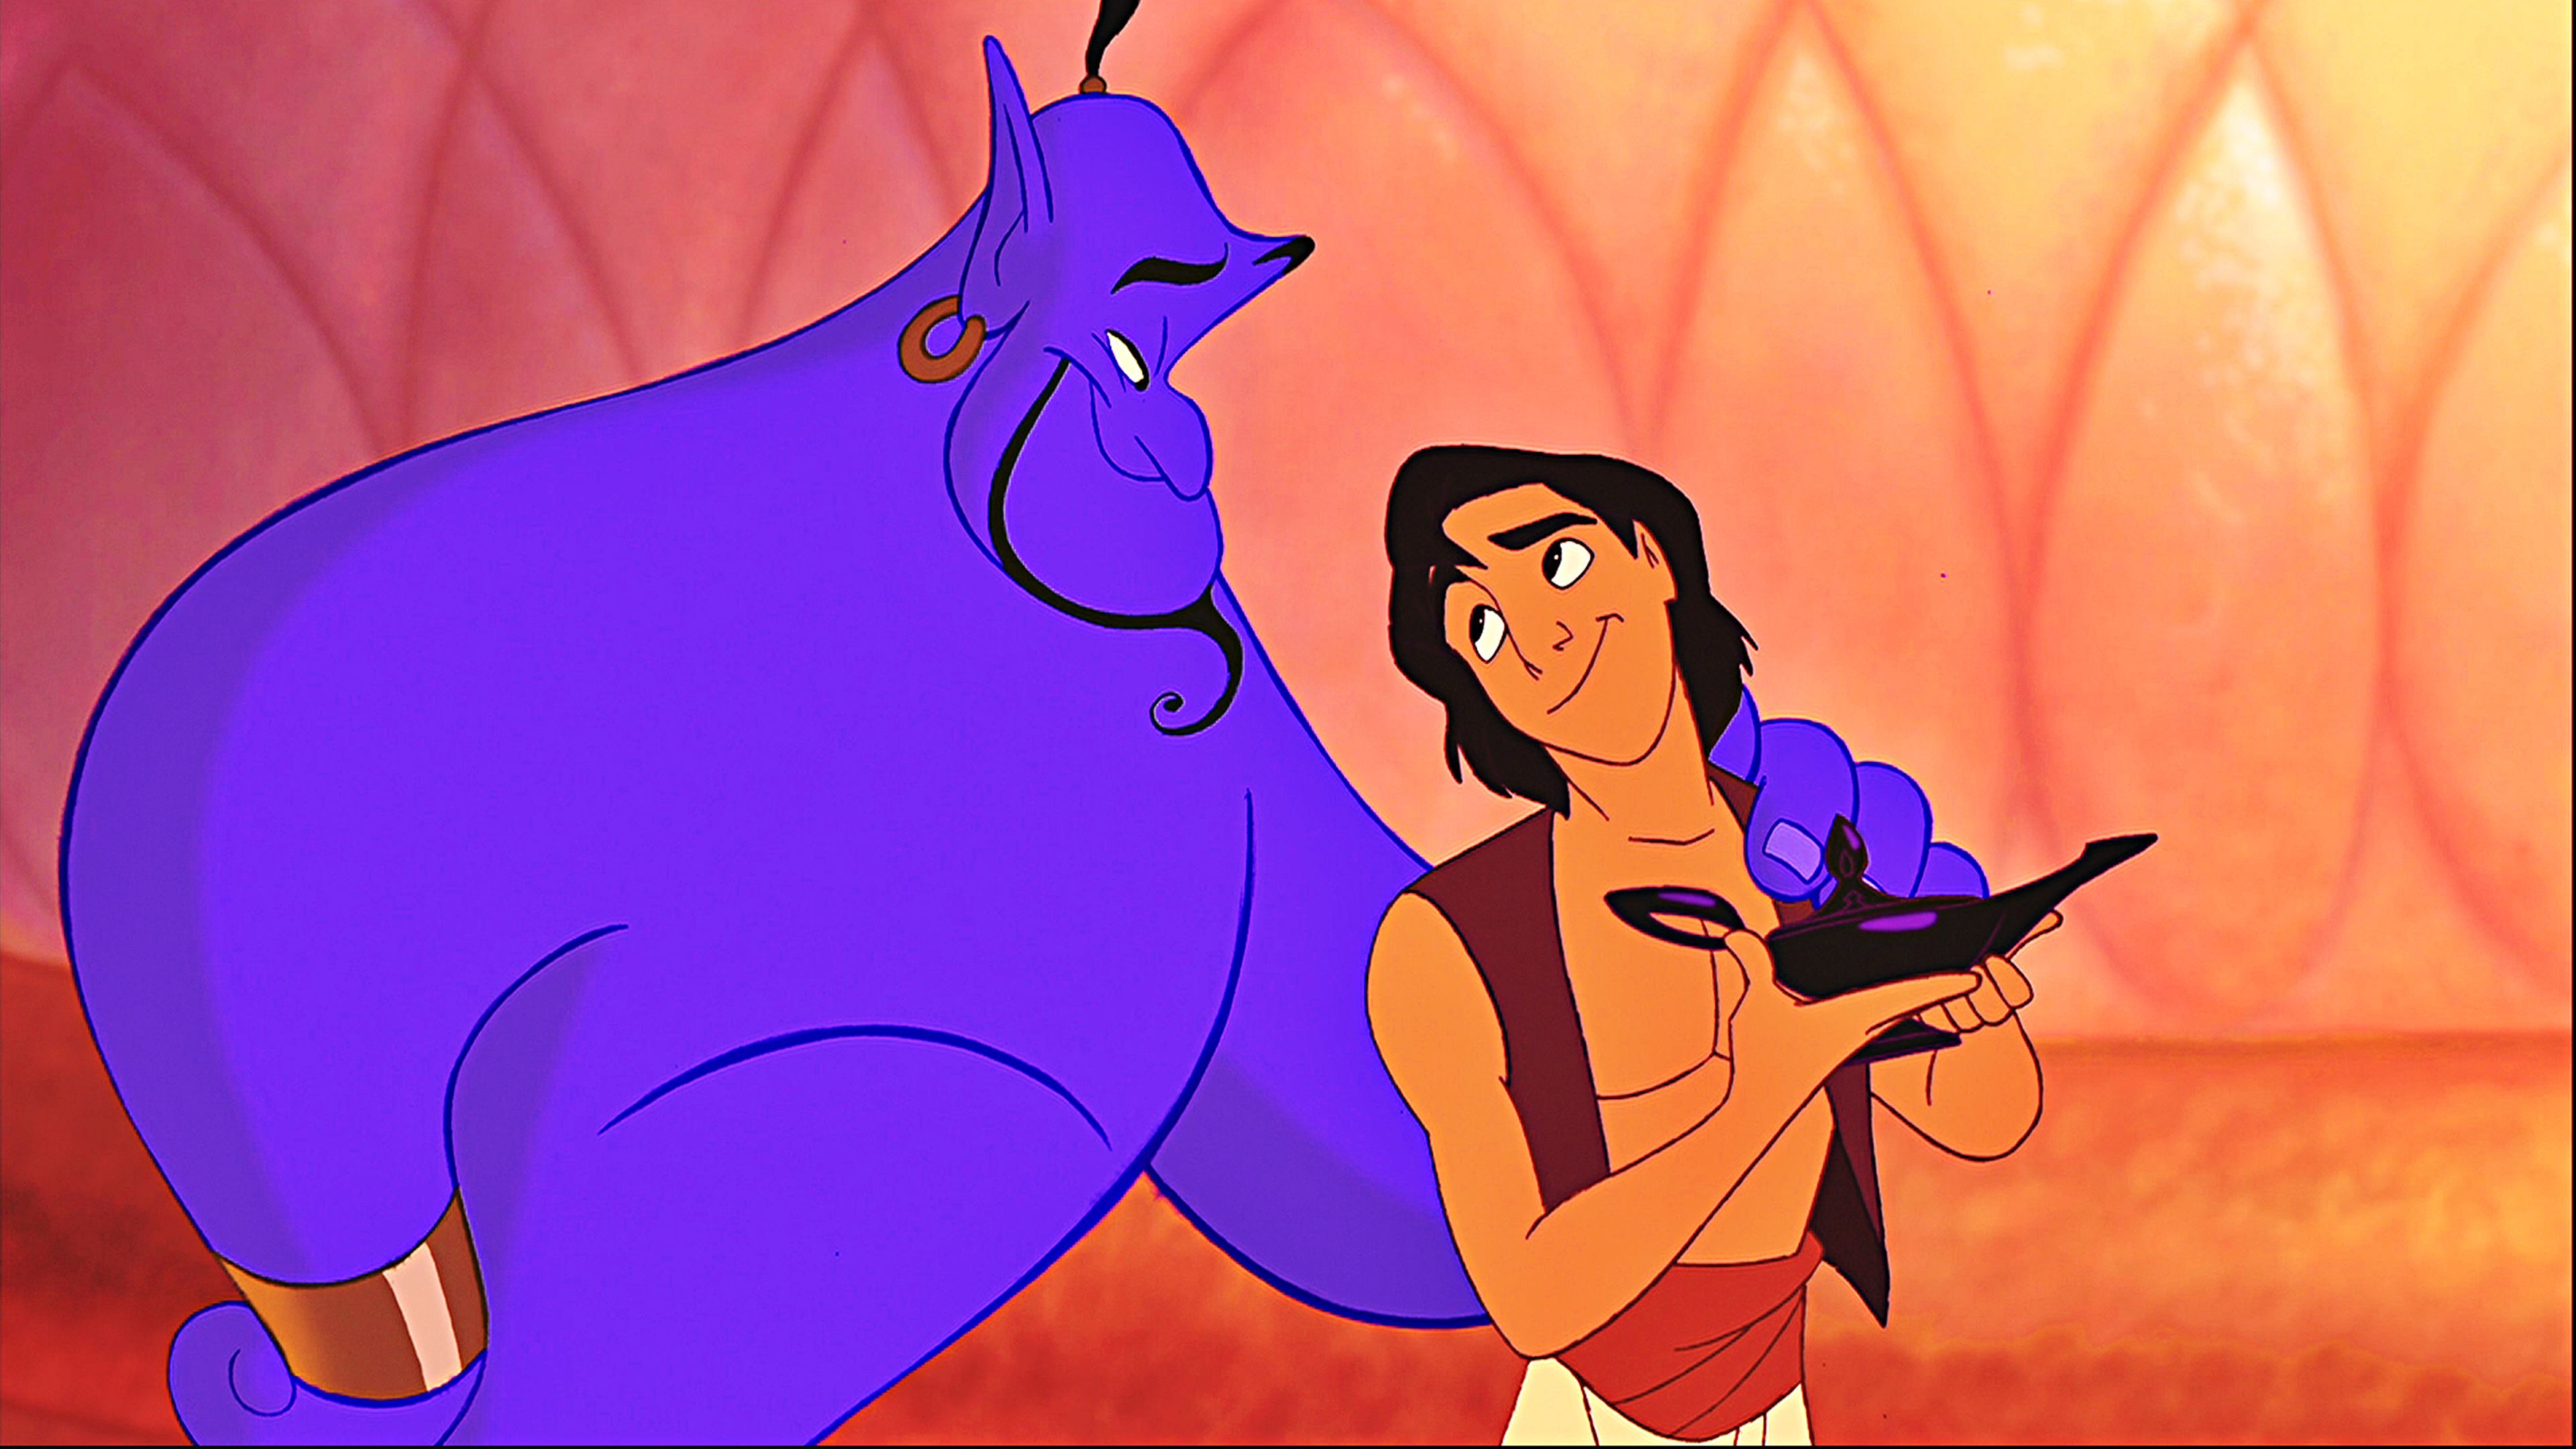 Aladdin y Genie Friend de The Magic Lamp Cartoons Wallpapers Hd